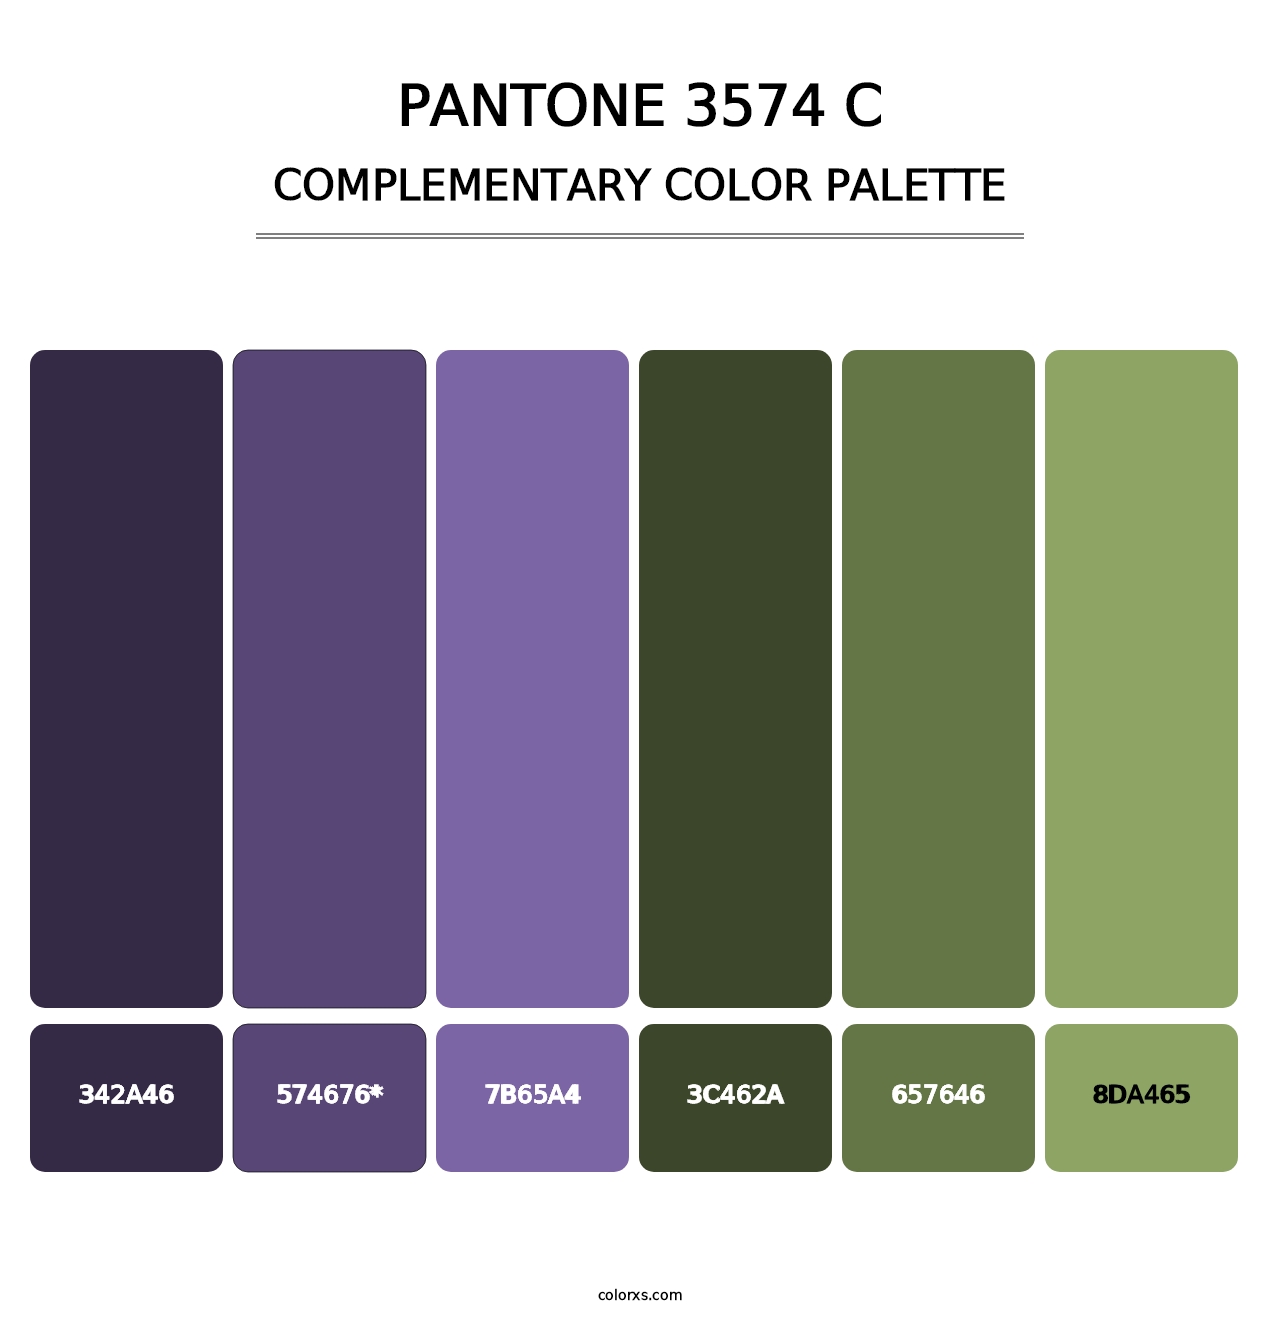 PANTONE 3574 C - Complementary Color Palette